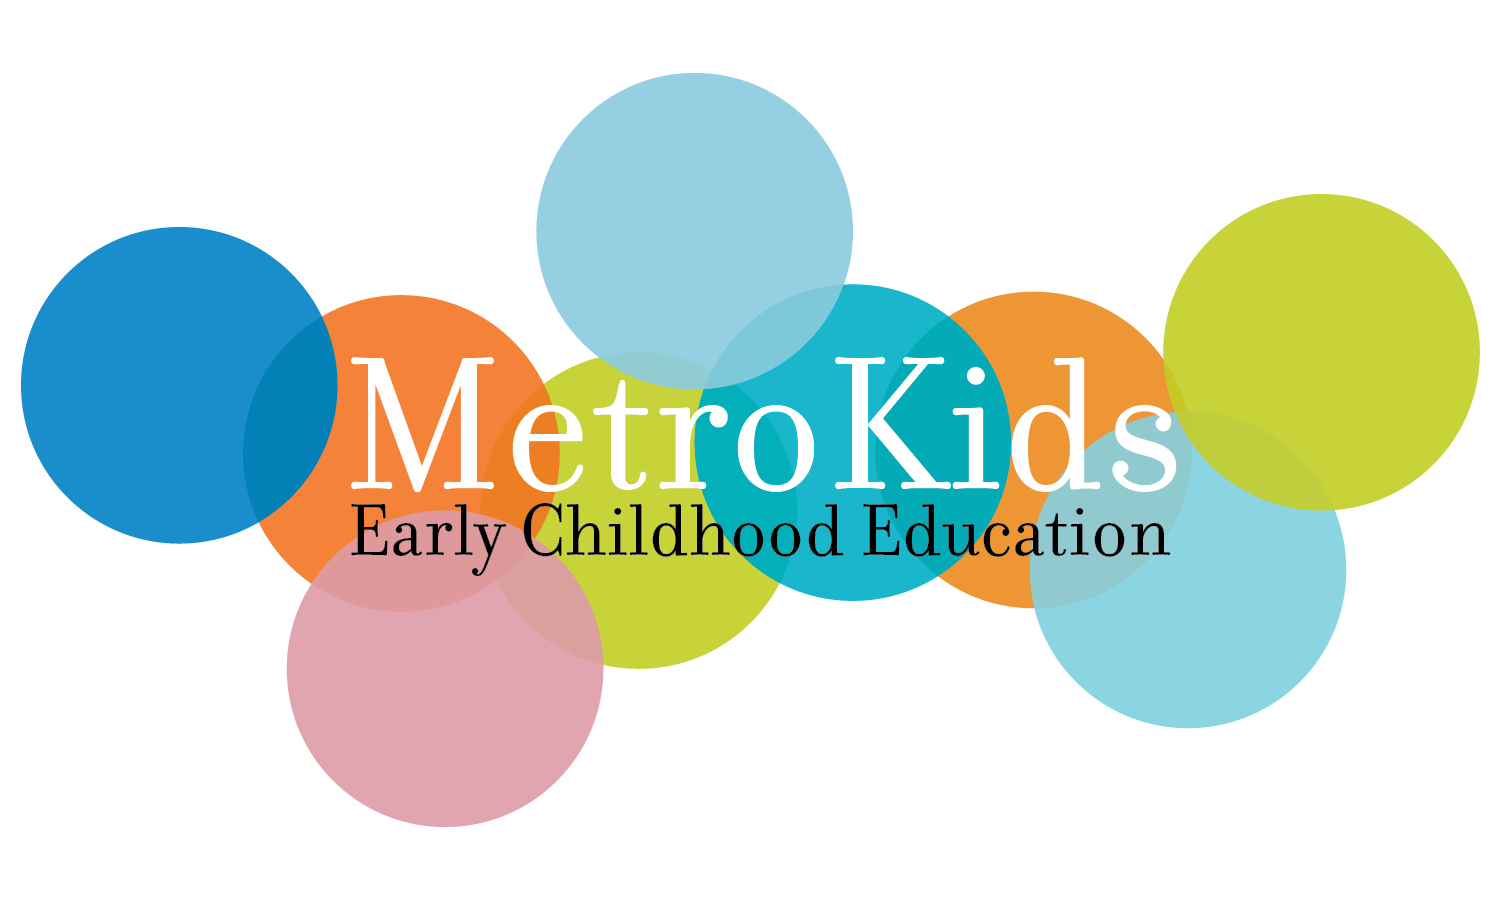 MetroKids Childcare Center in St. Paul